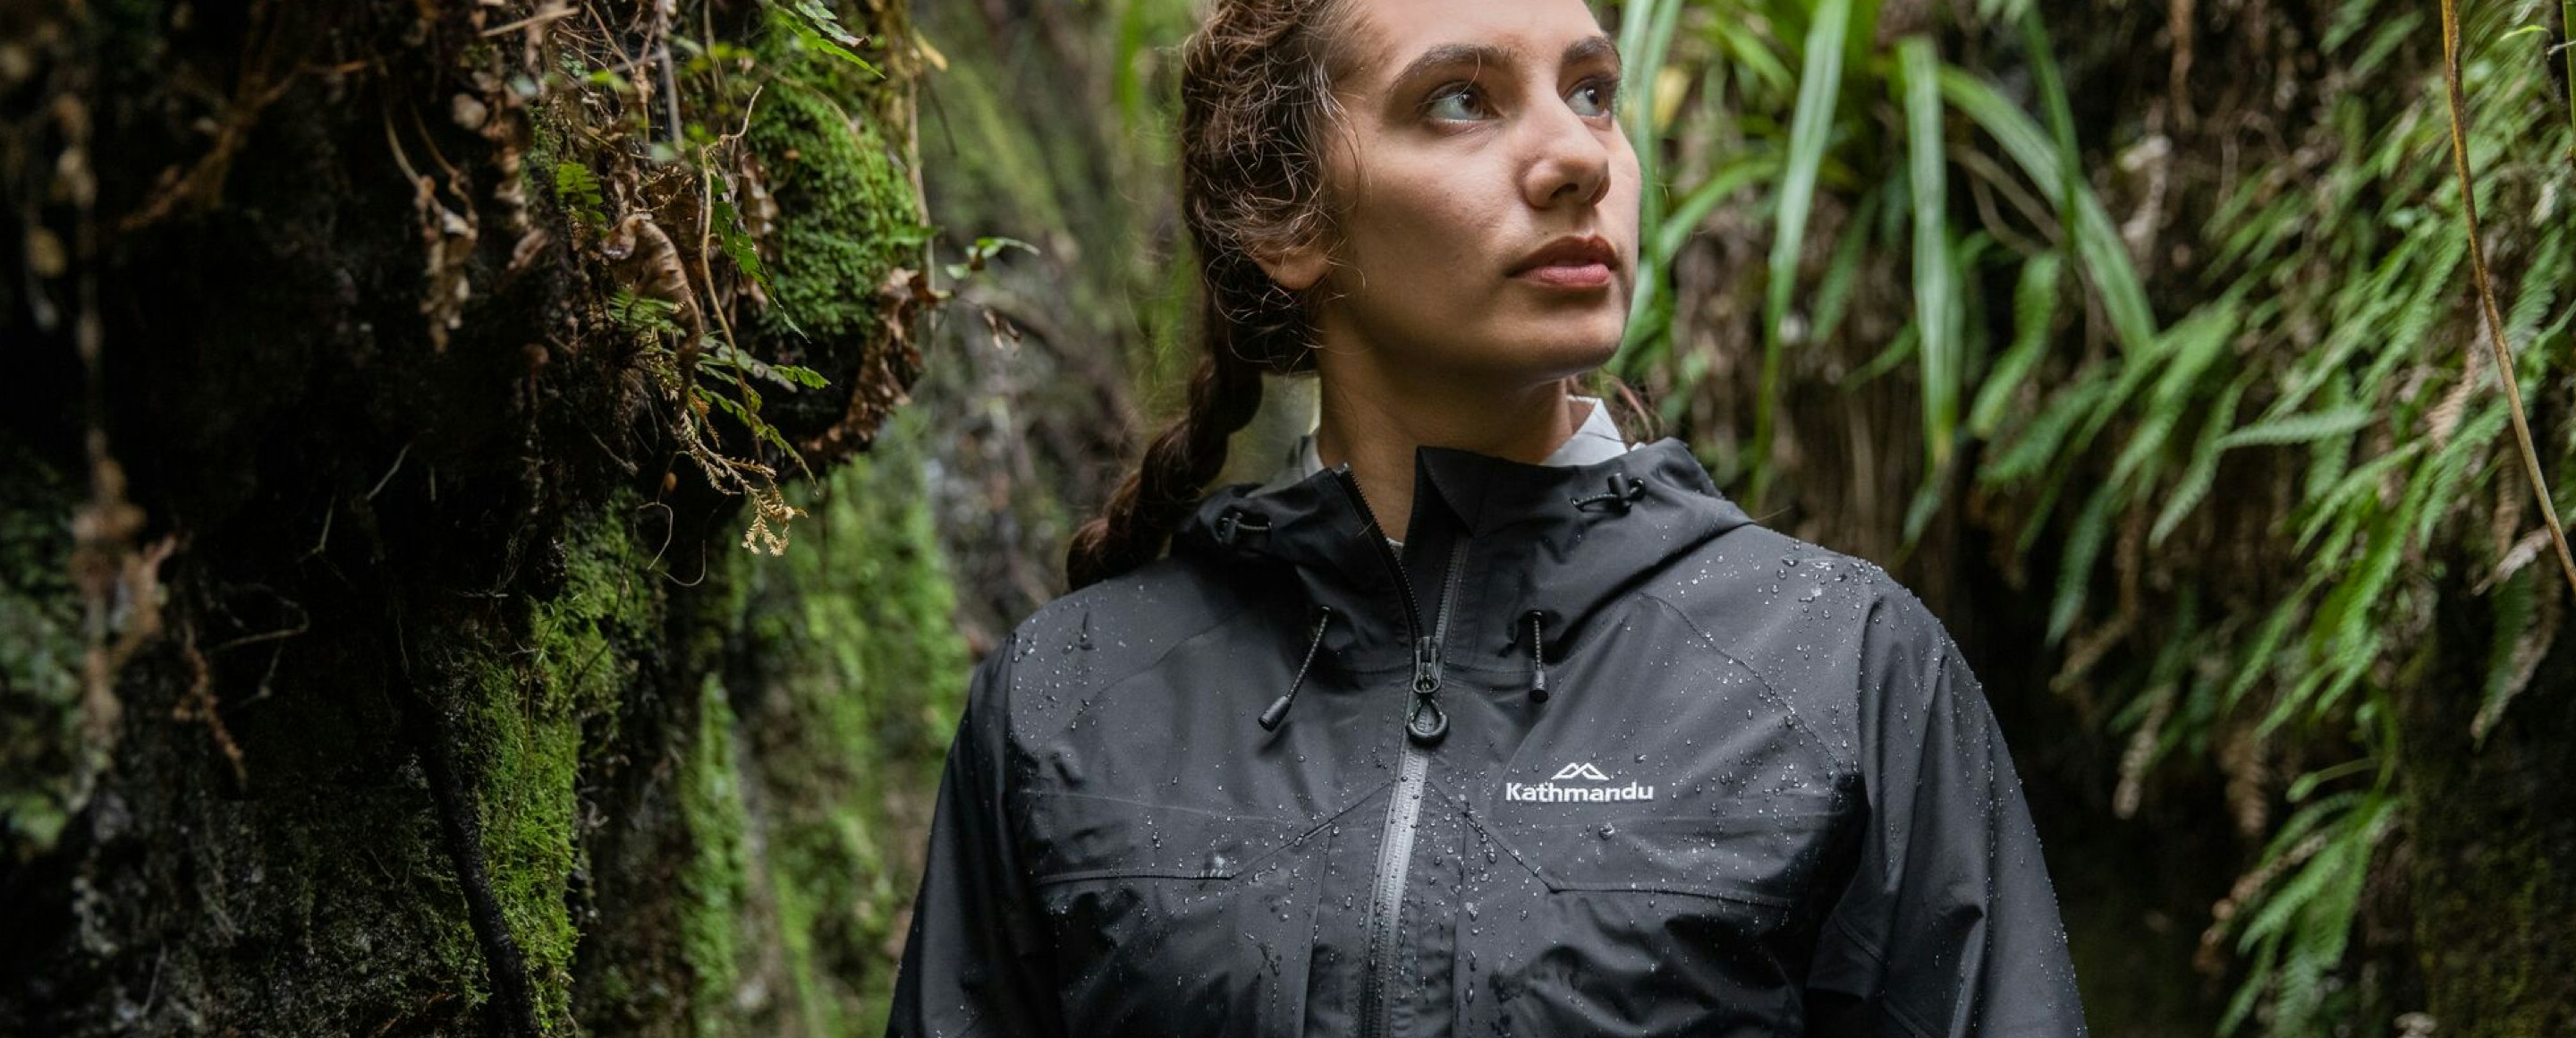 TSLA Womens Waterproof Rain Jackets Lightweight Breathable Raincoat with Hood Outdoor Hiking Windbreaker